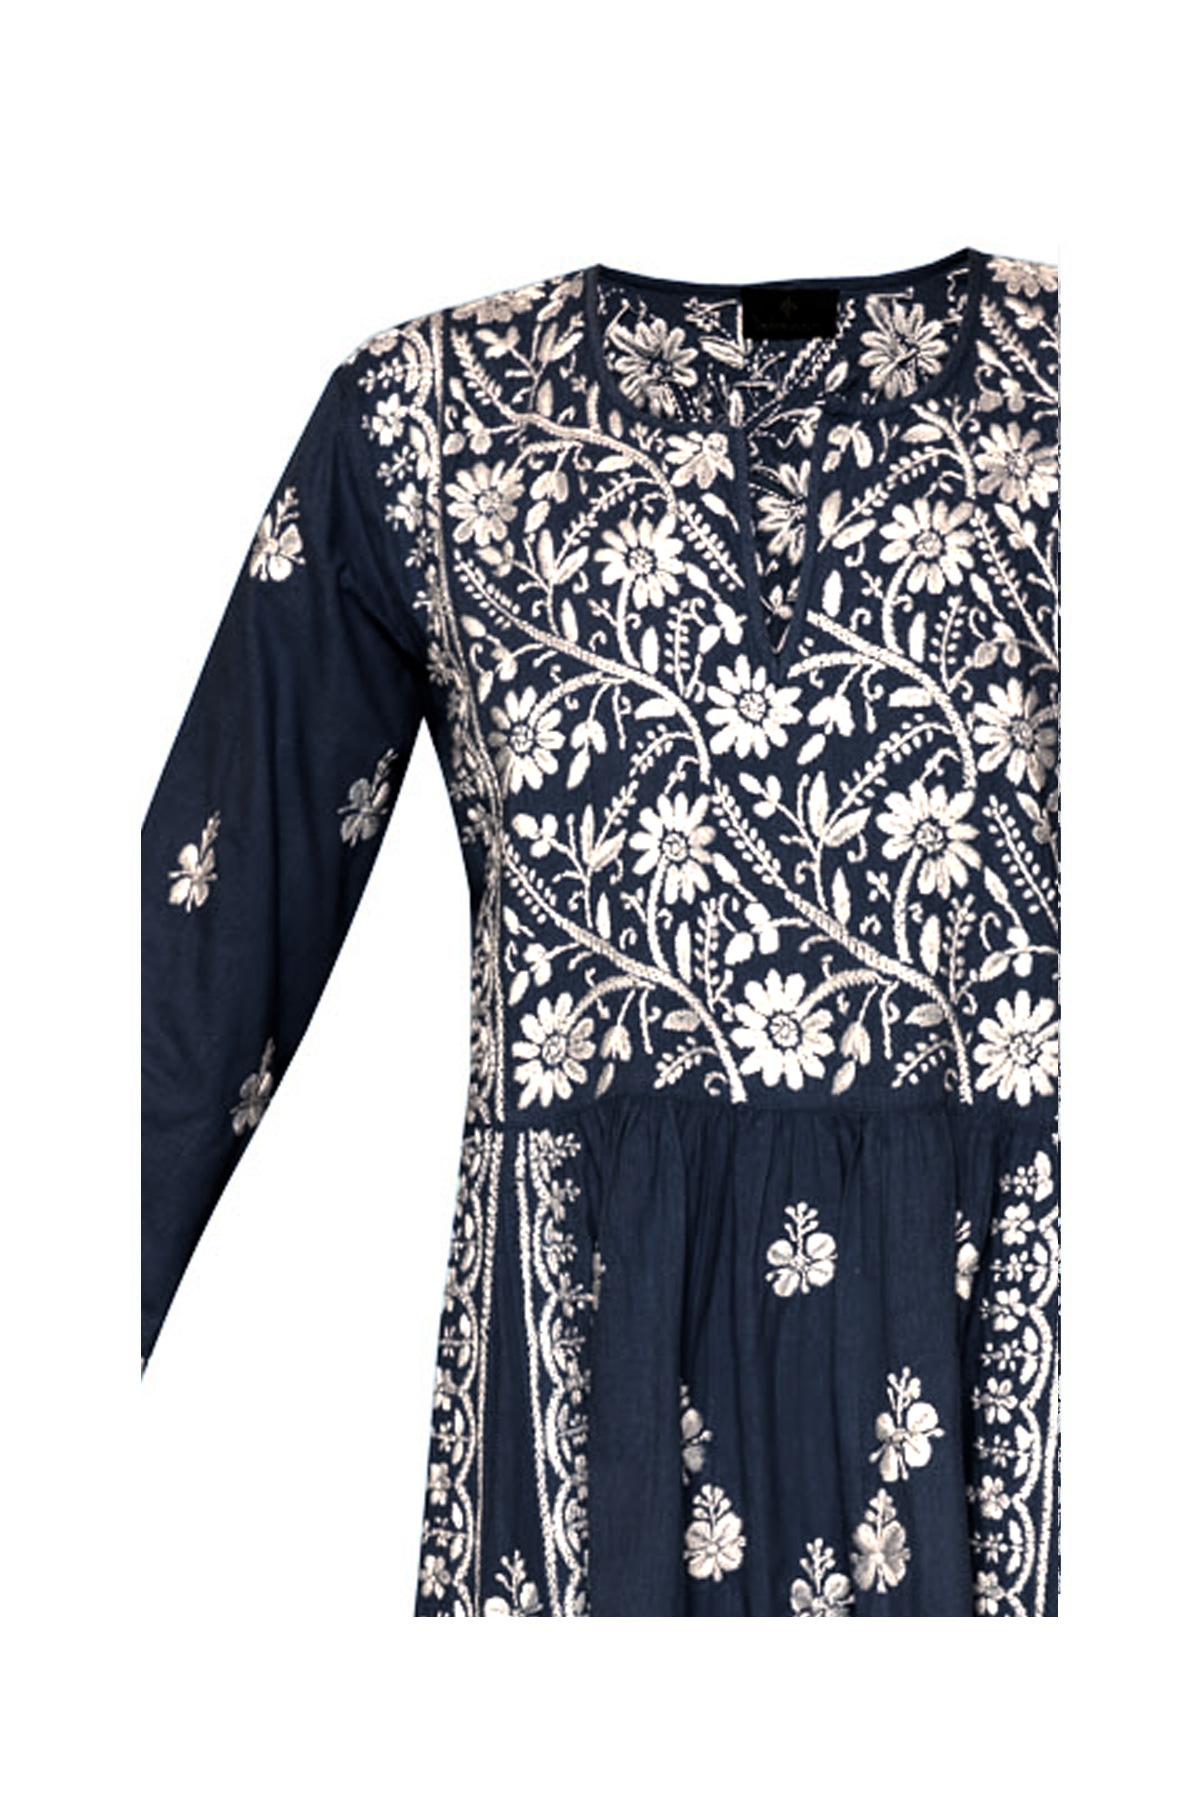 Cotton Embroidered Dress - Indigo